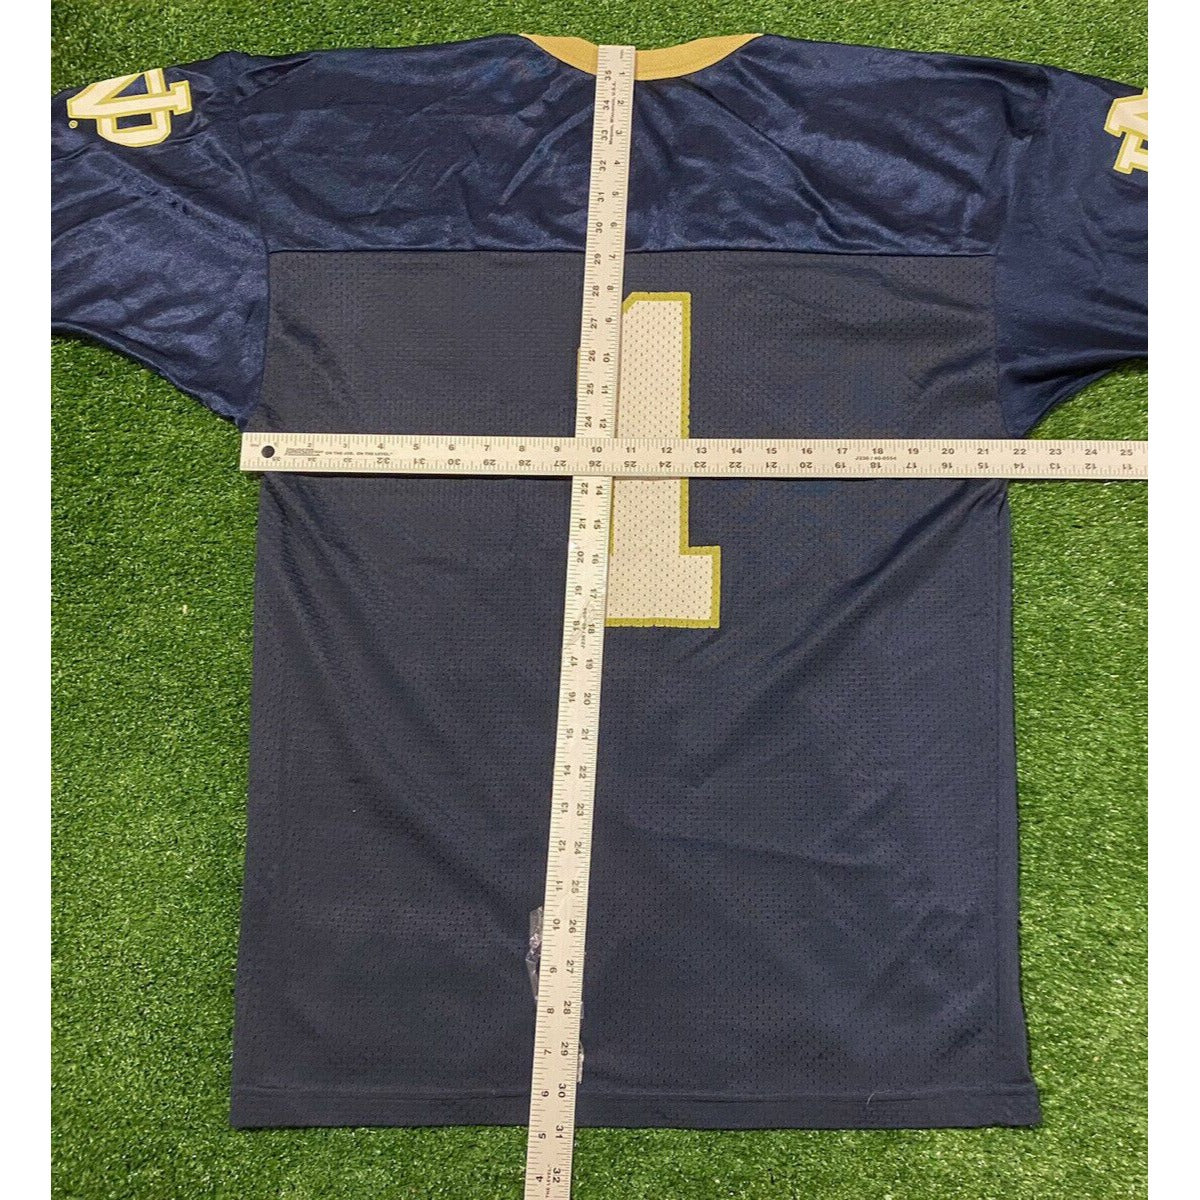 Vintage 1990s Champion Notre Dame Fighting Irish Football jersey #1 large